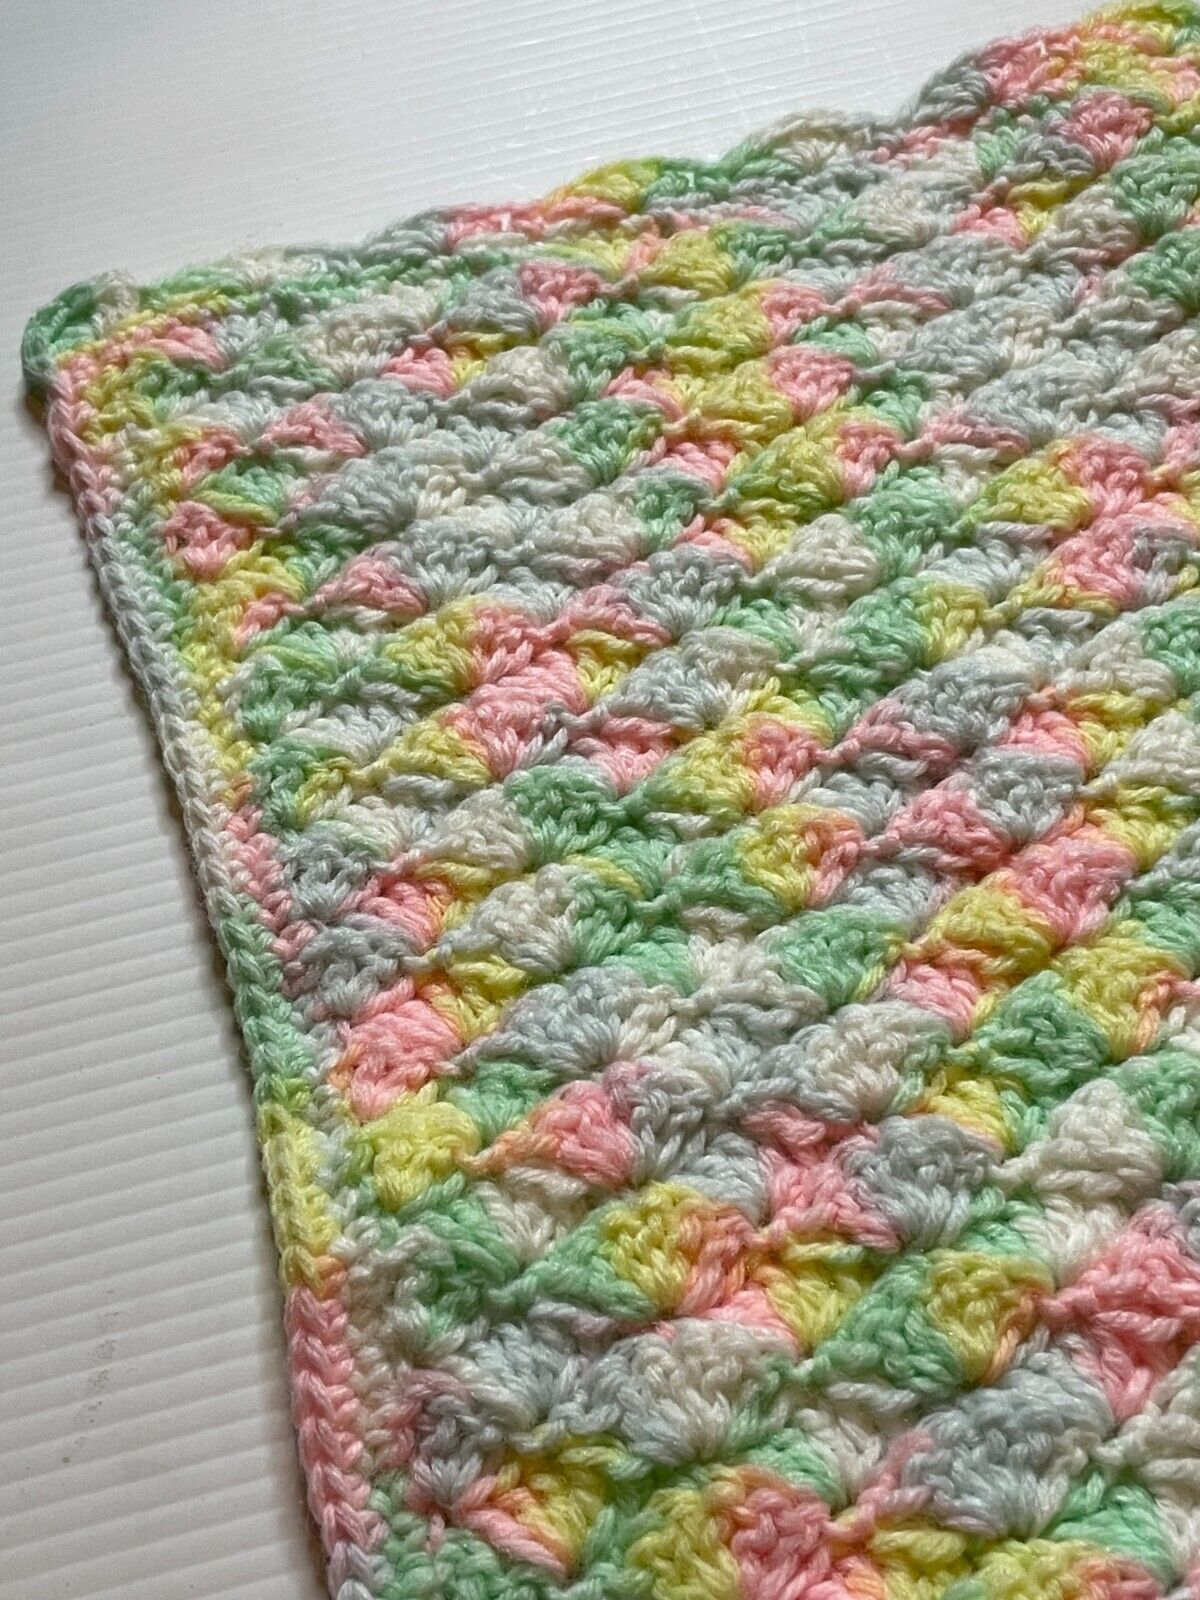 Granny Knit Handmade Crochet Afghan Blanket Throw Vintage Rainbow Pastels 38x32